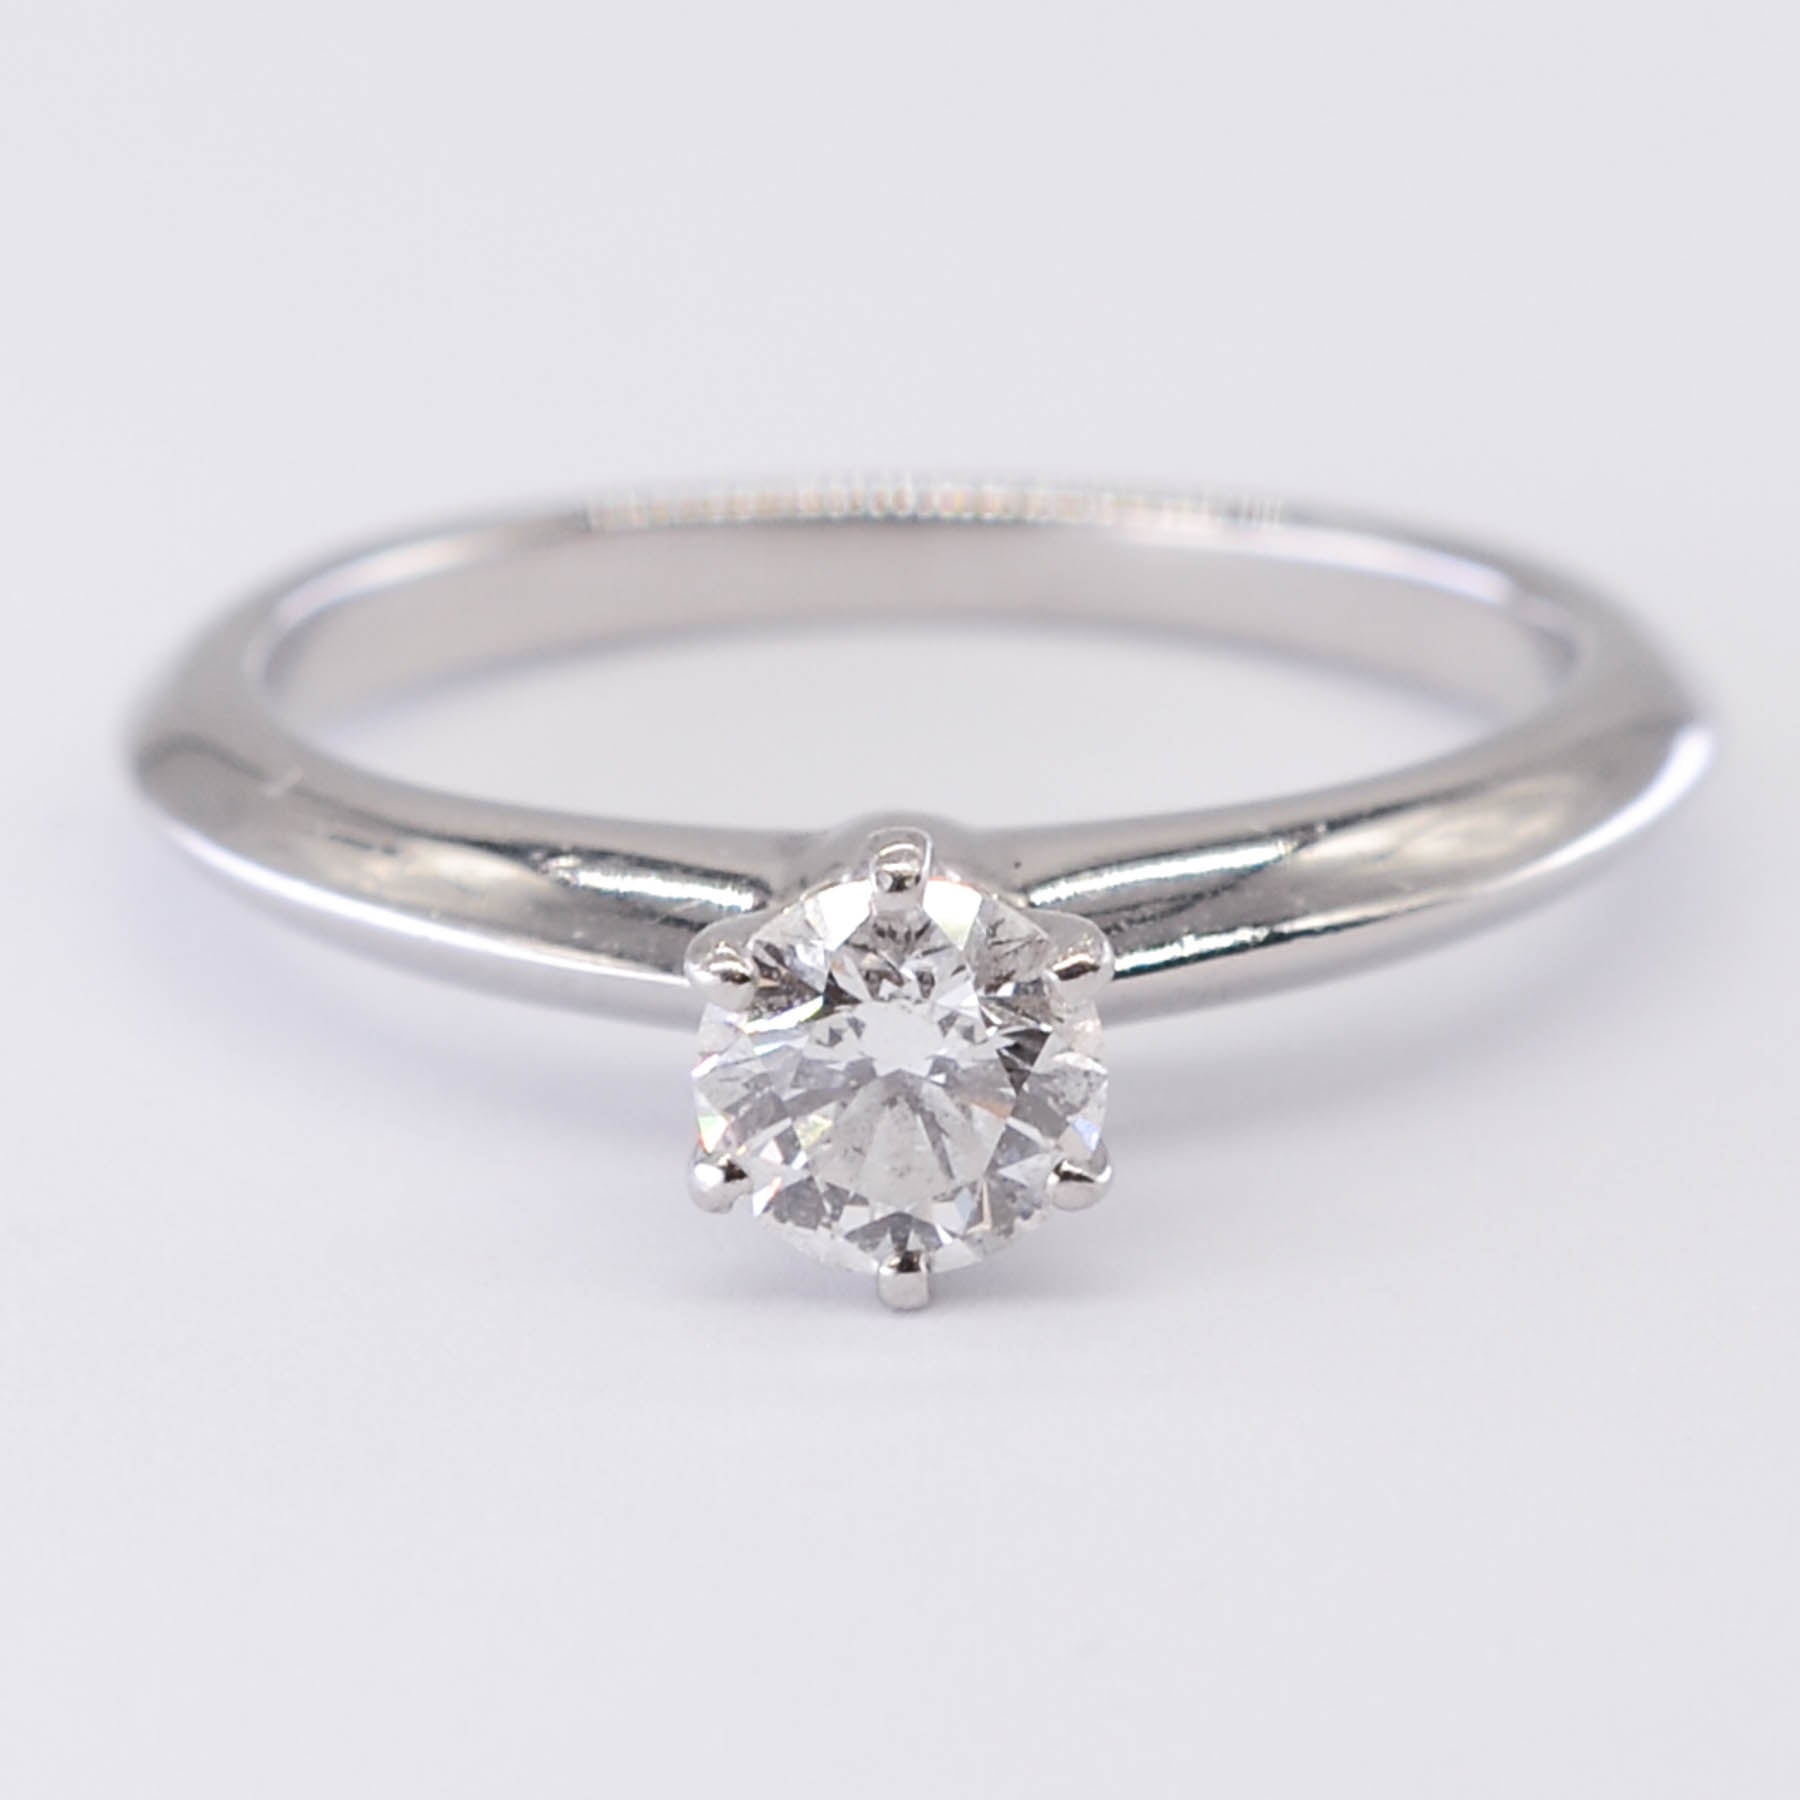 Tiffany & Co.' Canadian Diamond Engagement Ring in Platinum | 0.38ct VS2 F Ex | SZ 4.75 |